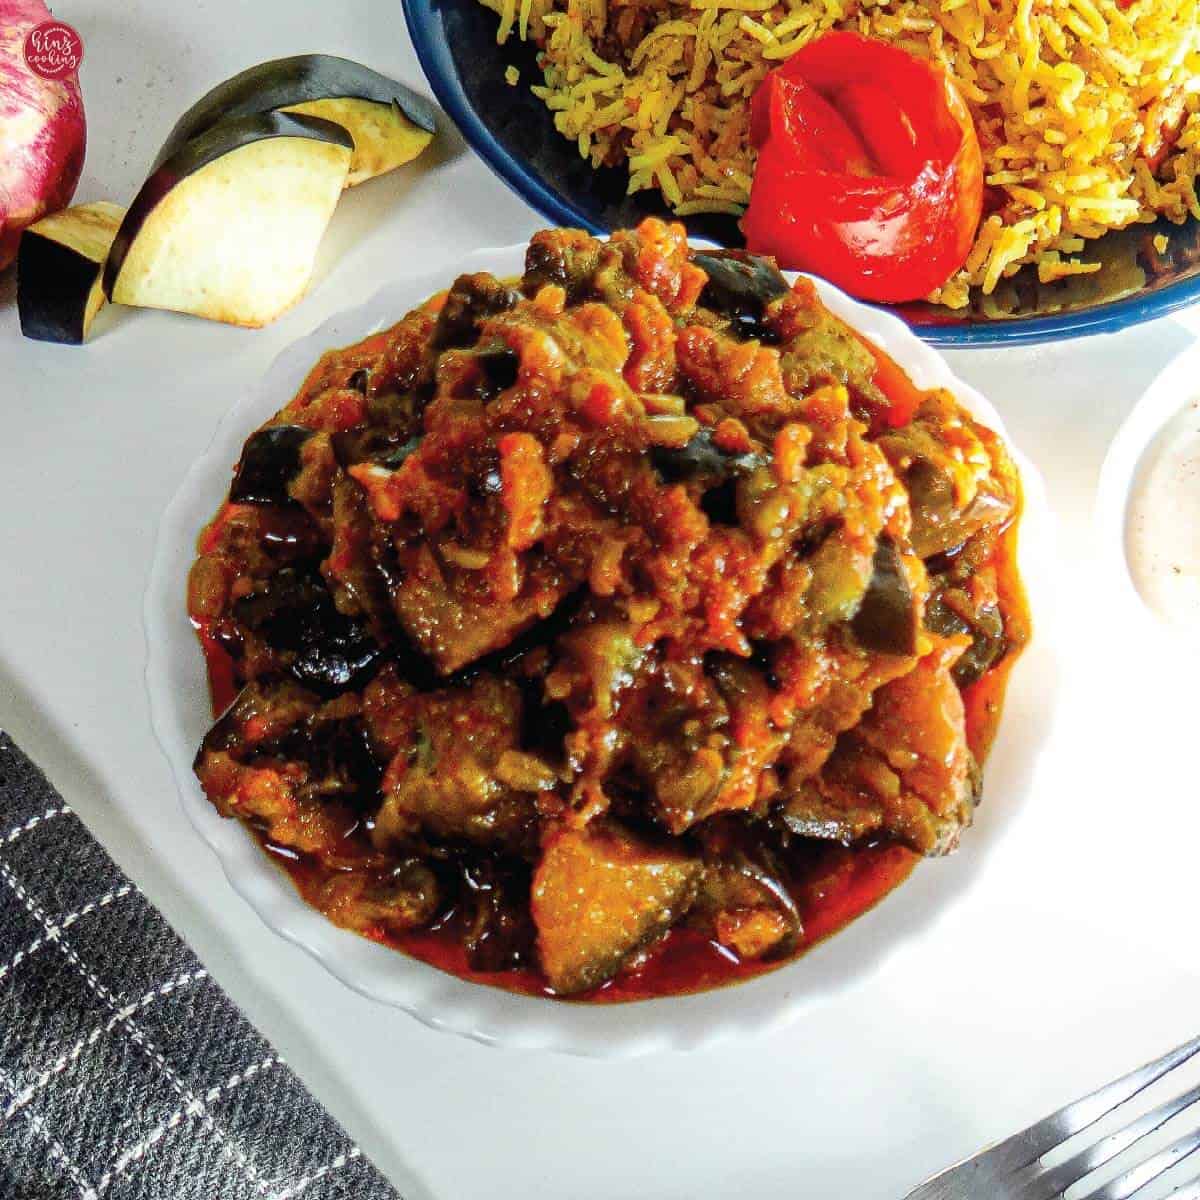 brinjal bhaji - aubergine bhaji recipe